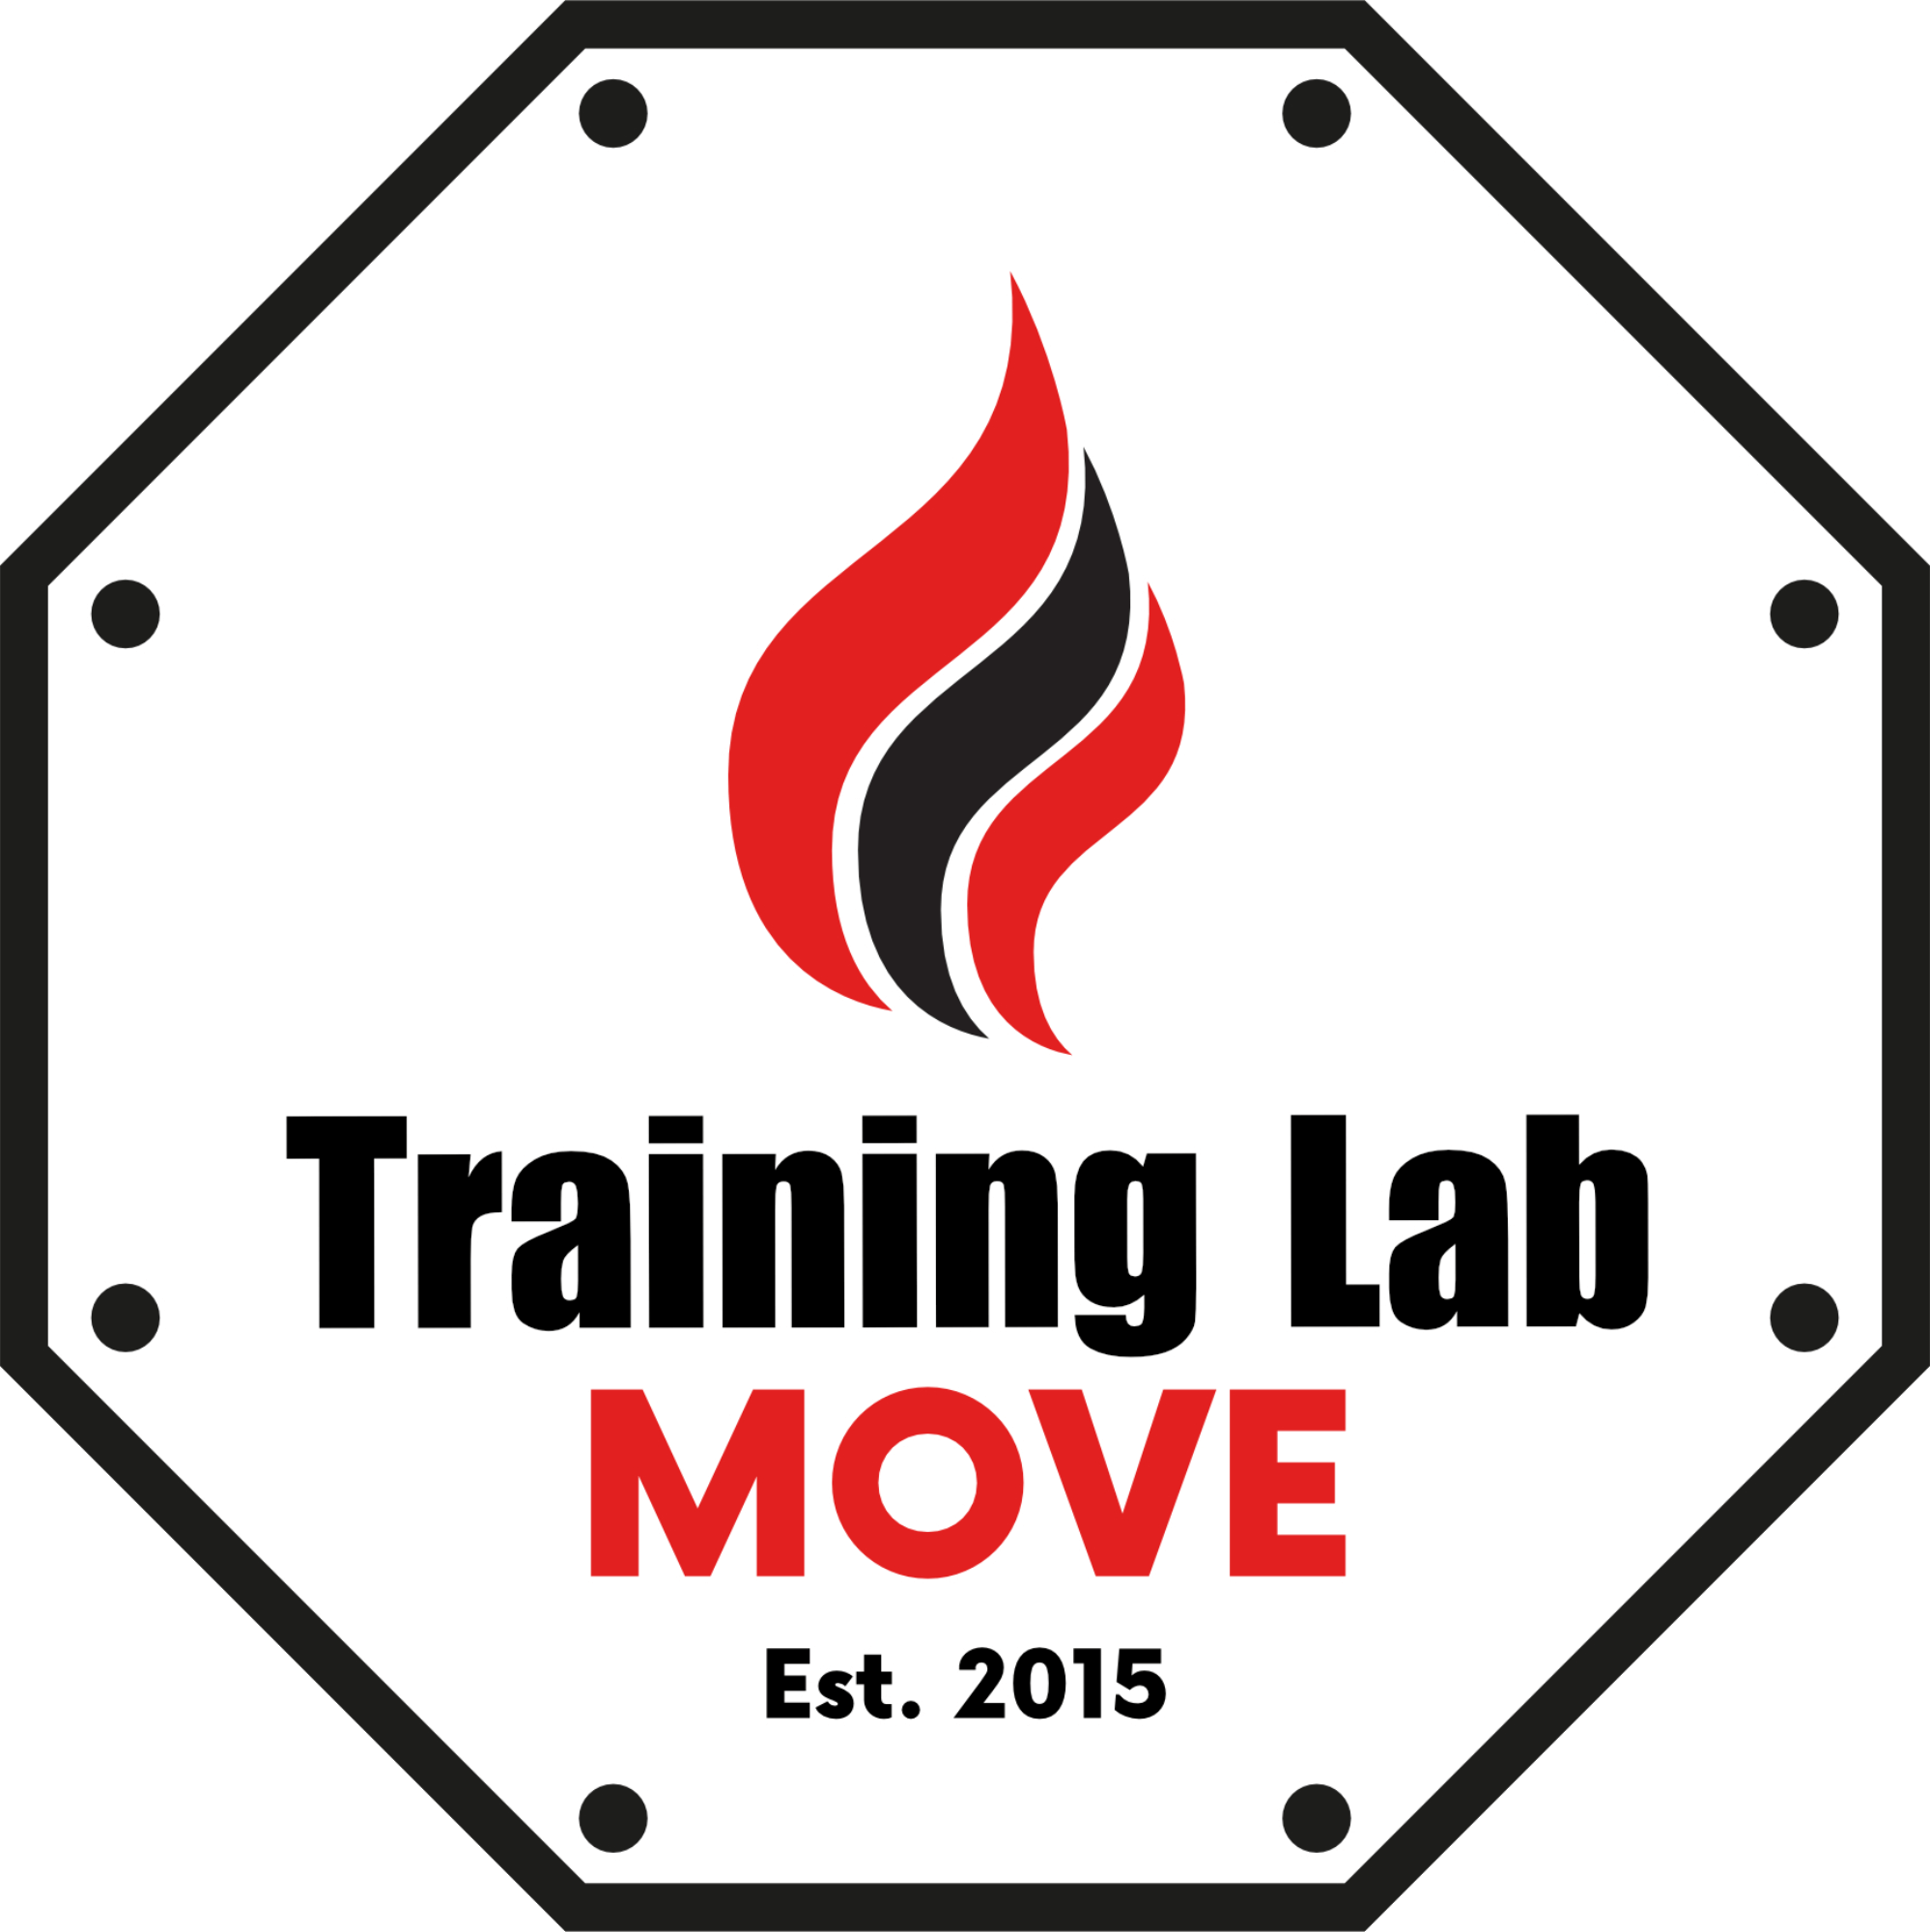 Move training lab_logo